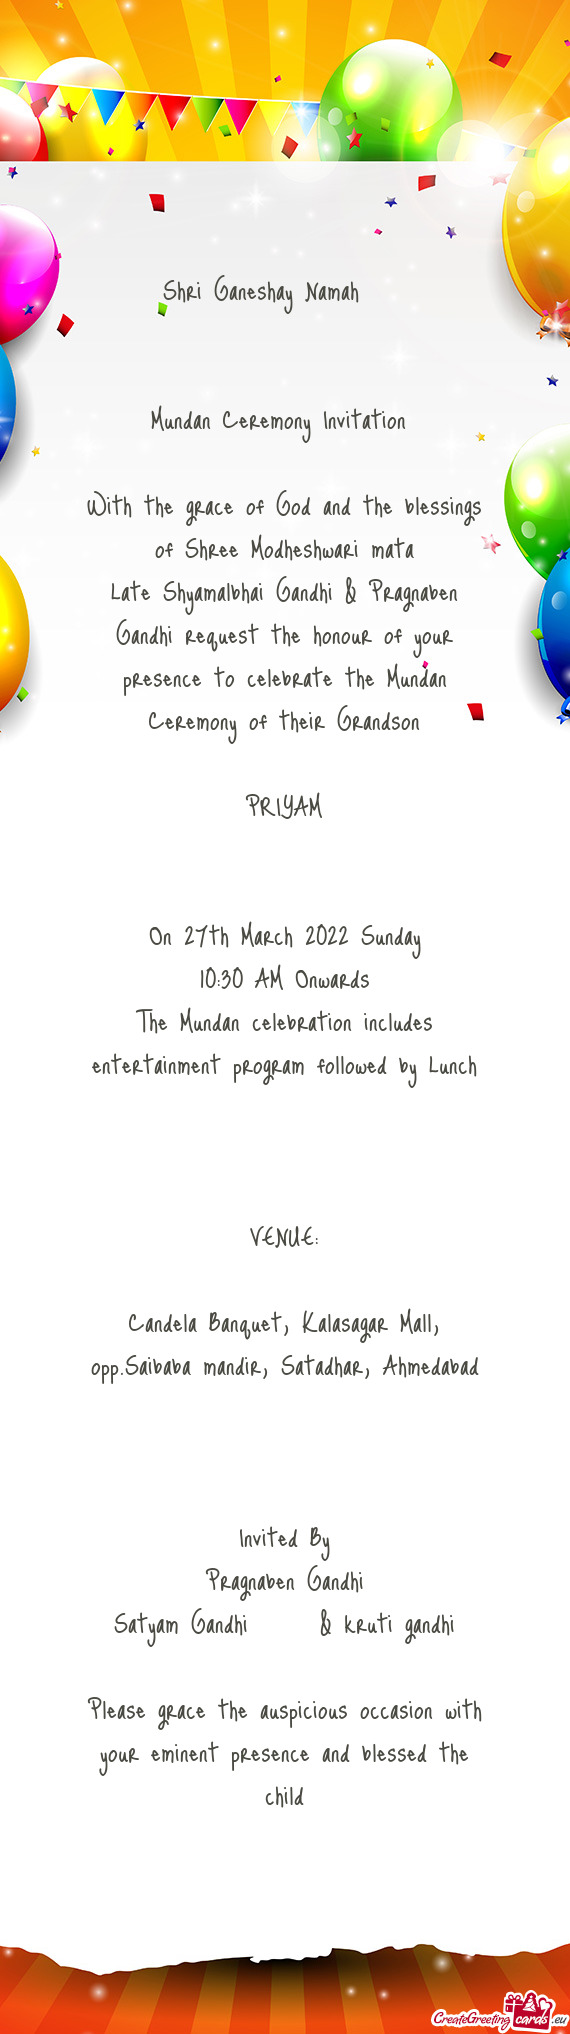 Late Shyamalbhai Gandhi & Pragnaben Gandhi request the honour of your presence to celebrate the Mund